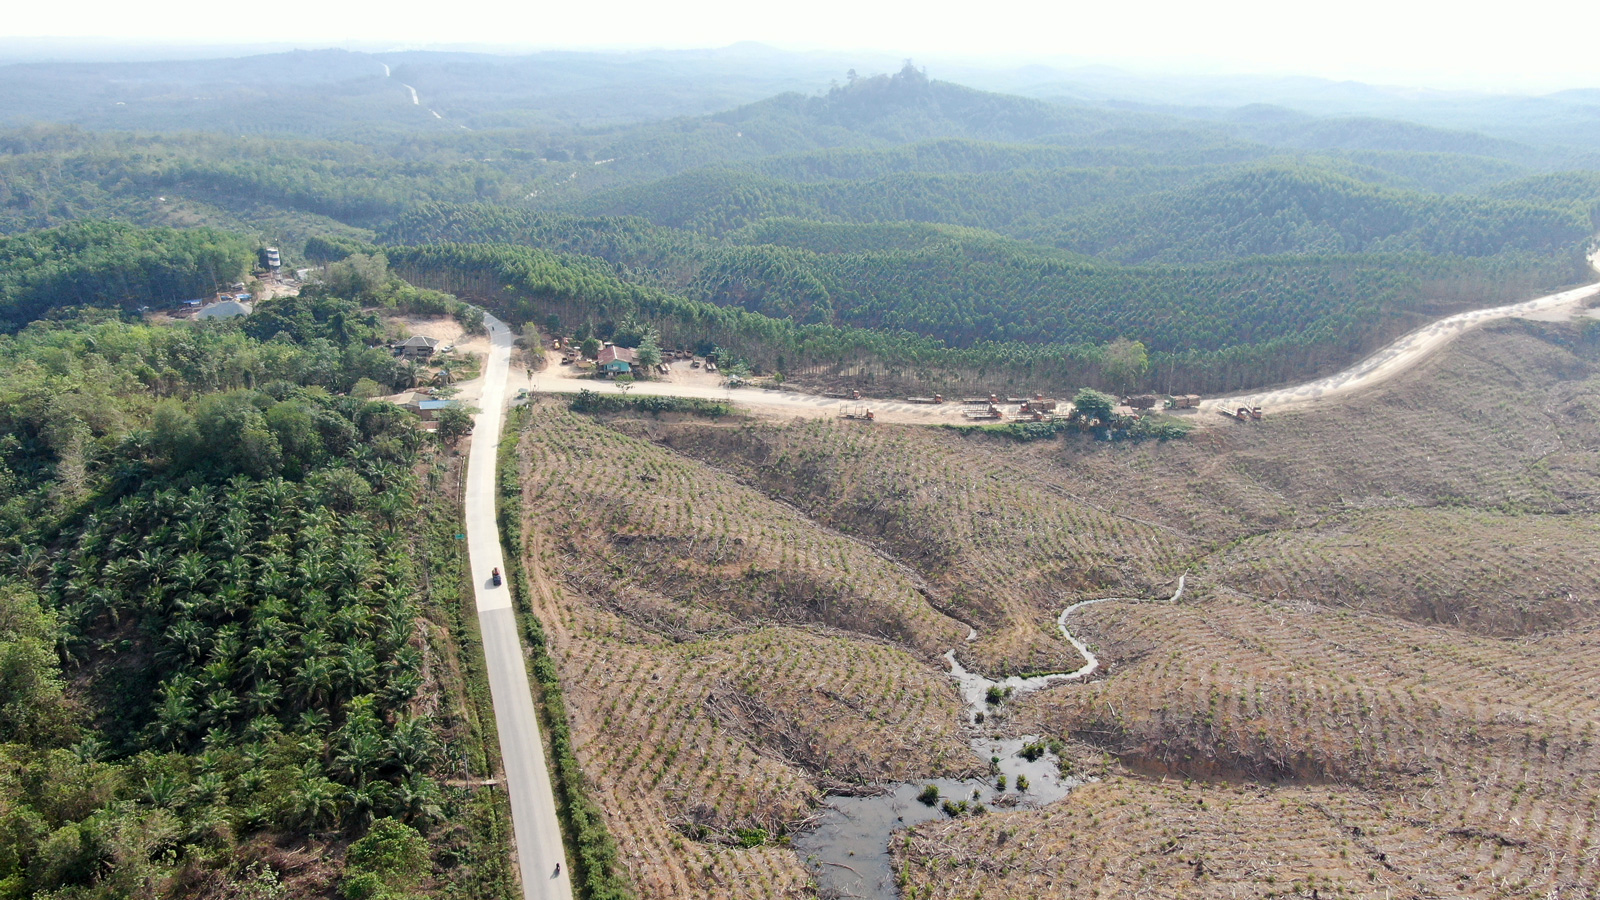 Area konsesi sebuah hutan tanaman industri milik PT. International Timber Corporation Indonesia Hutani Manunggal di Kecamatan Sepaku, Penajam Paser Utara, Kalimantan Timur, 2020. JATAM